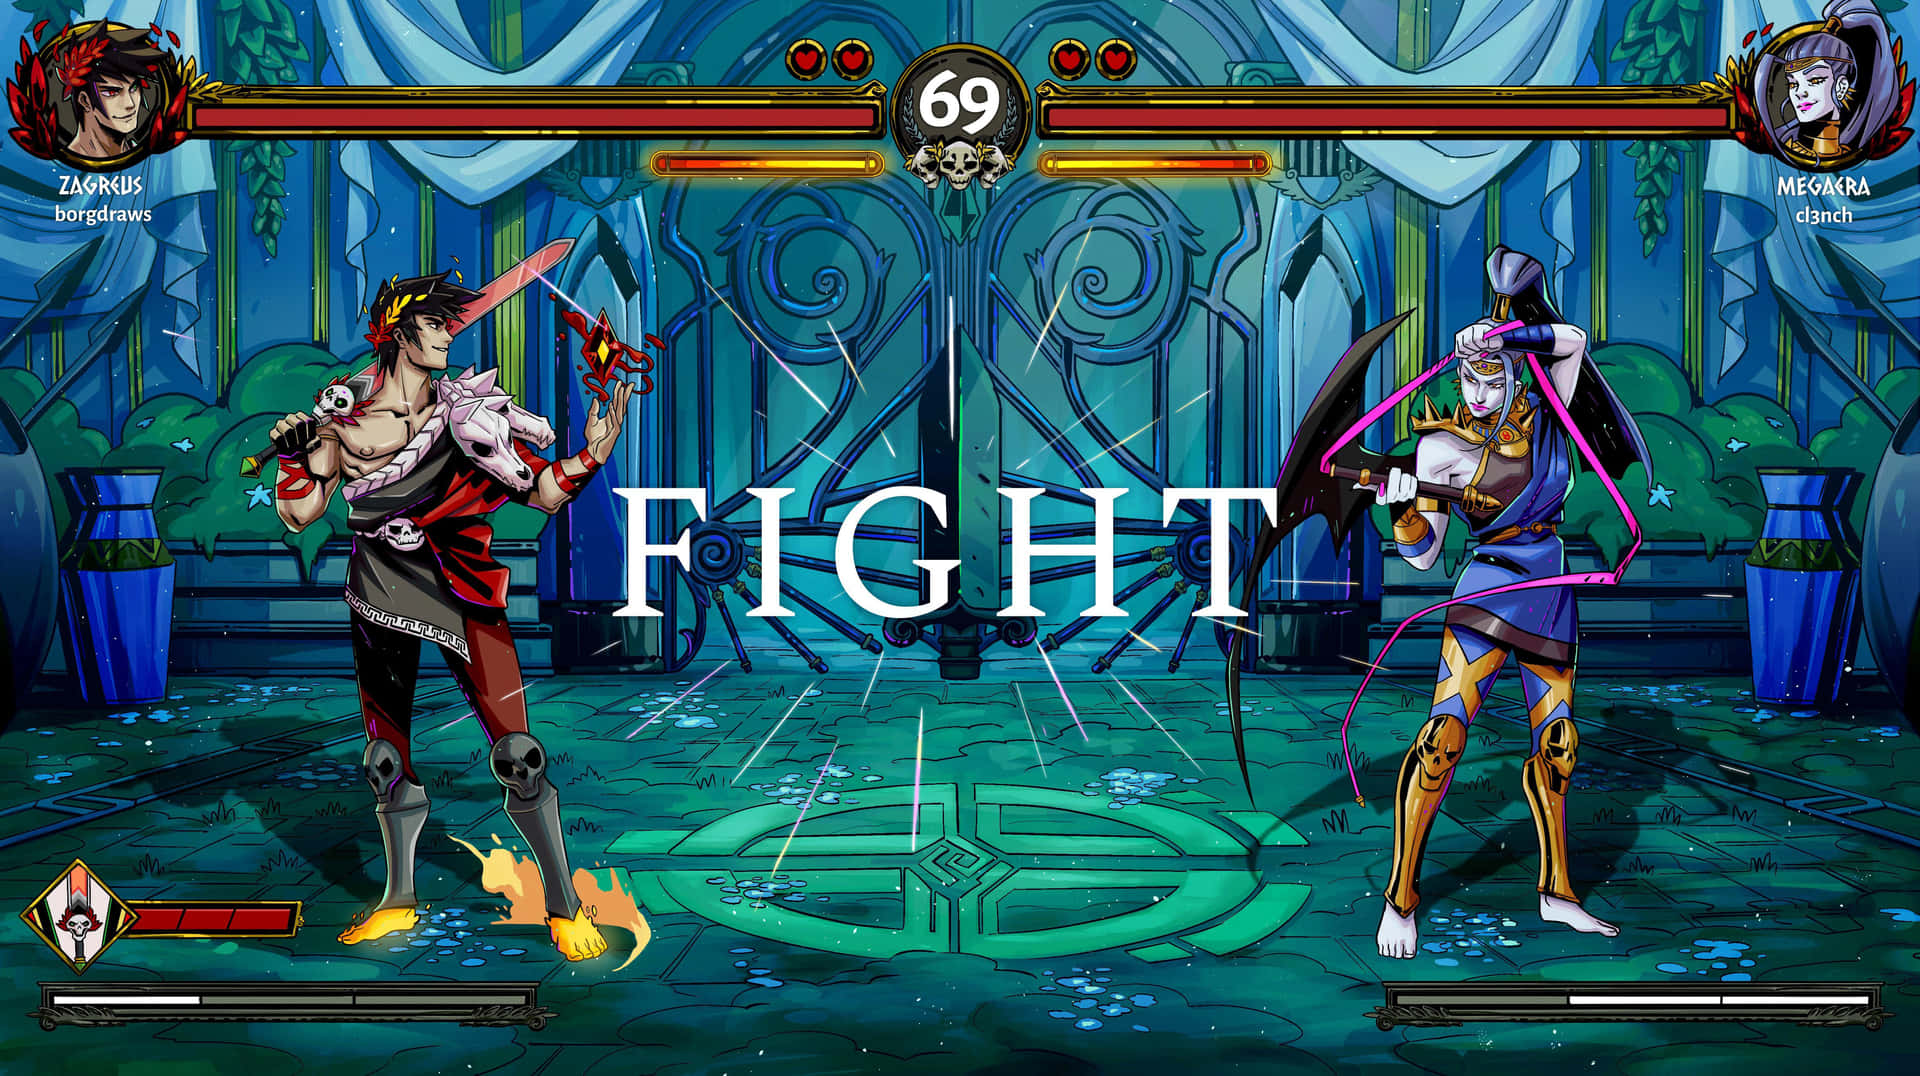 Captivating Fighting Game Battle Wallpaper